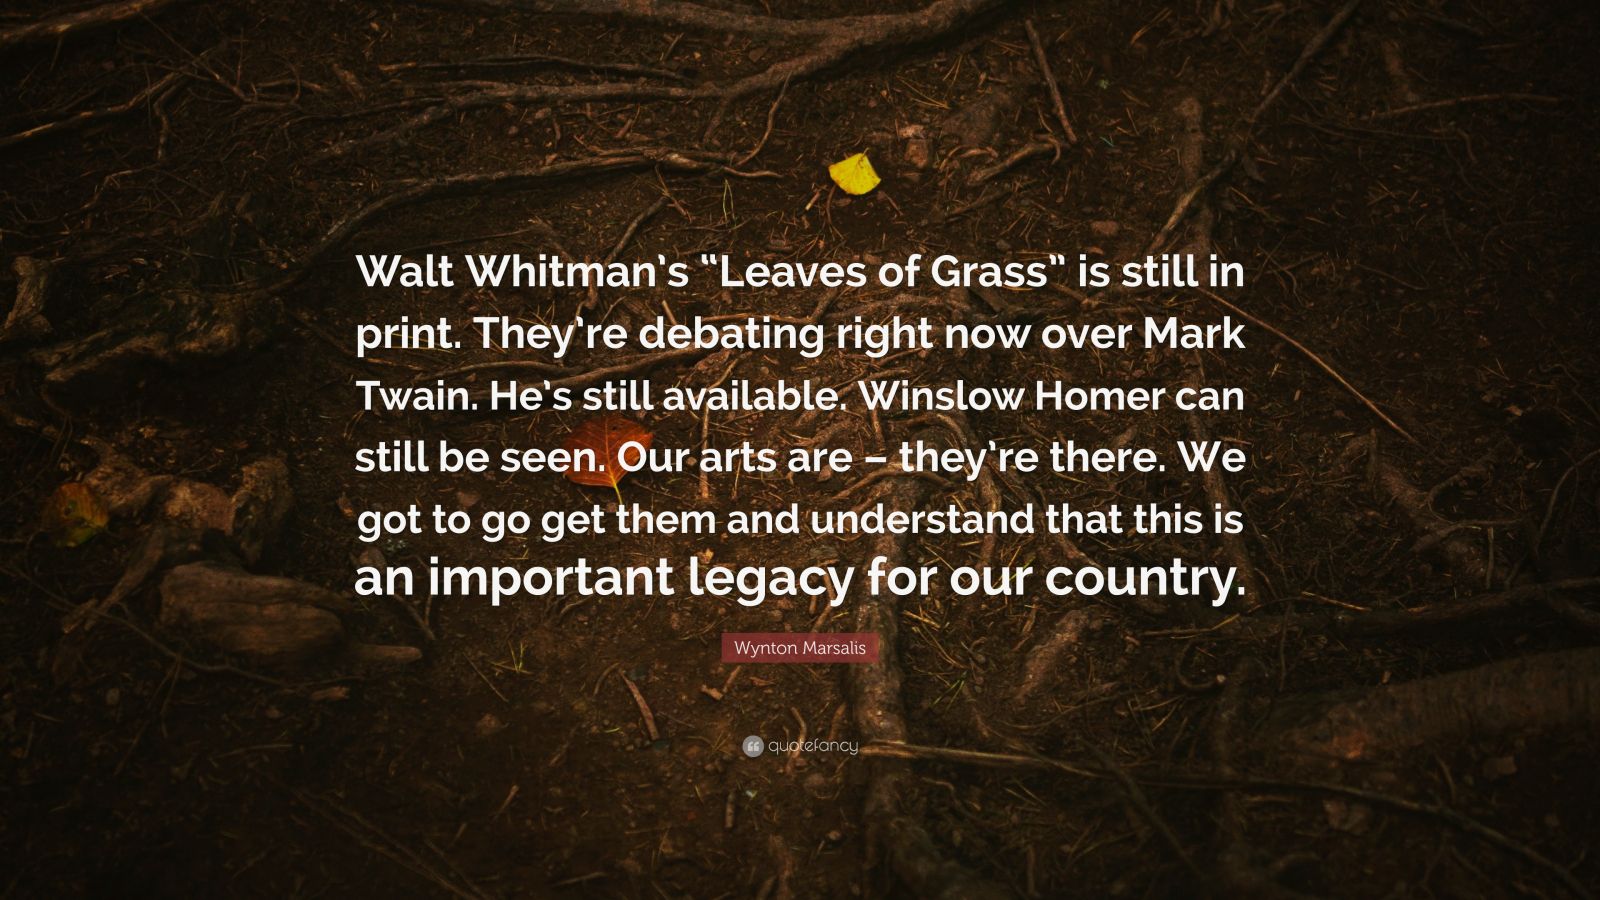 Wynton Marsalis Quote: “Walt Whitman’s “Leaves of Grass” is still in ...